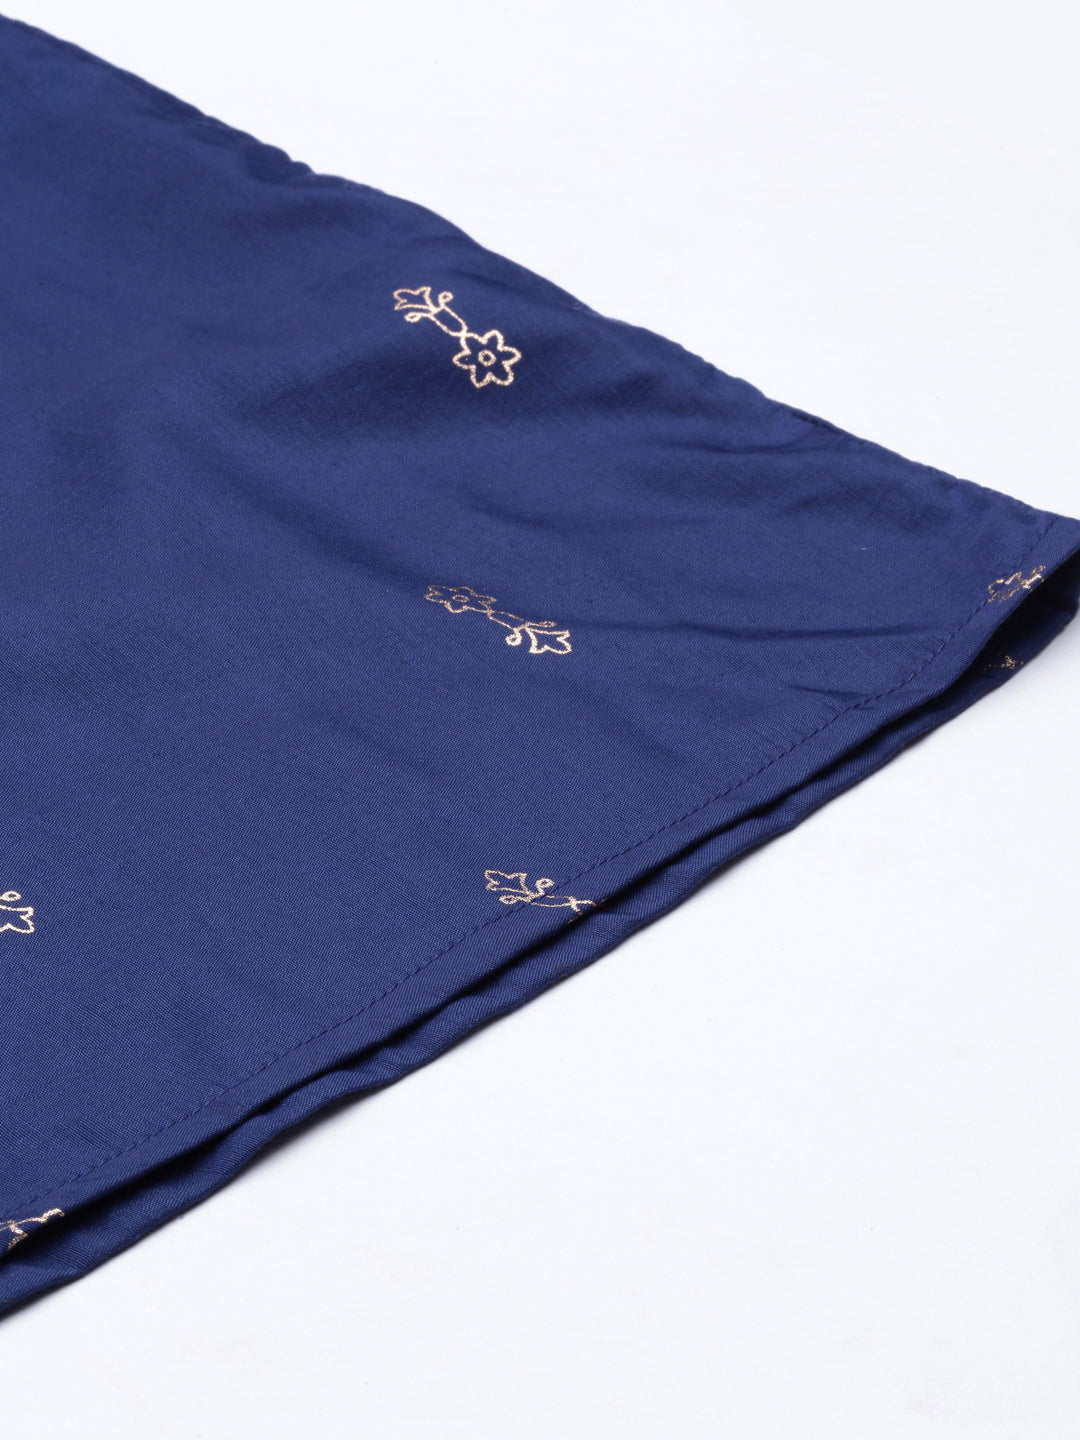 Neeru's Blue Color Santoon Fabric Plazzo